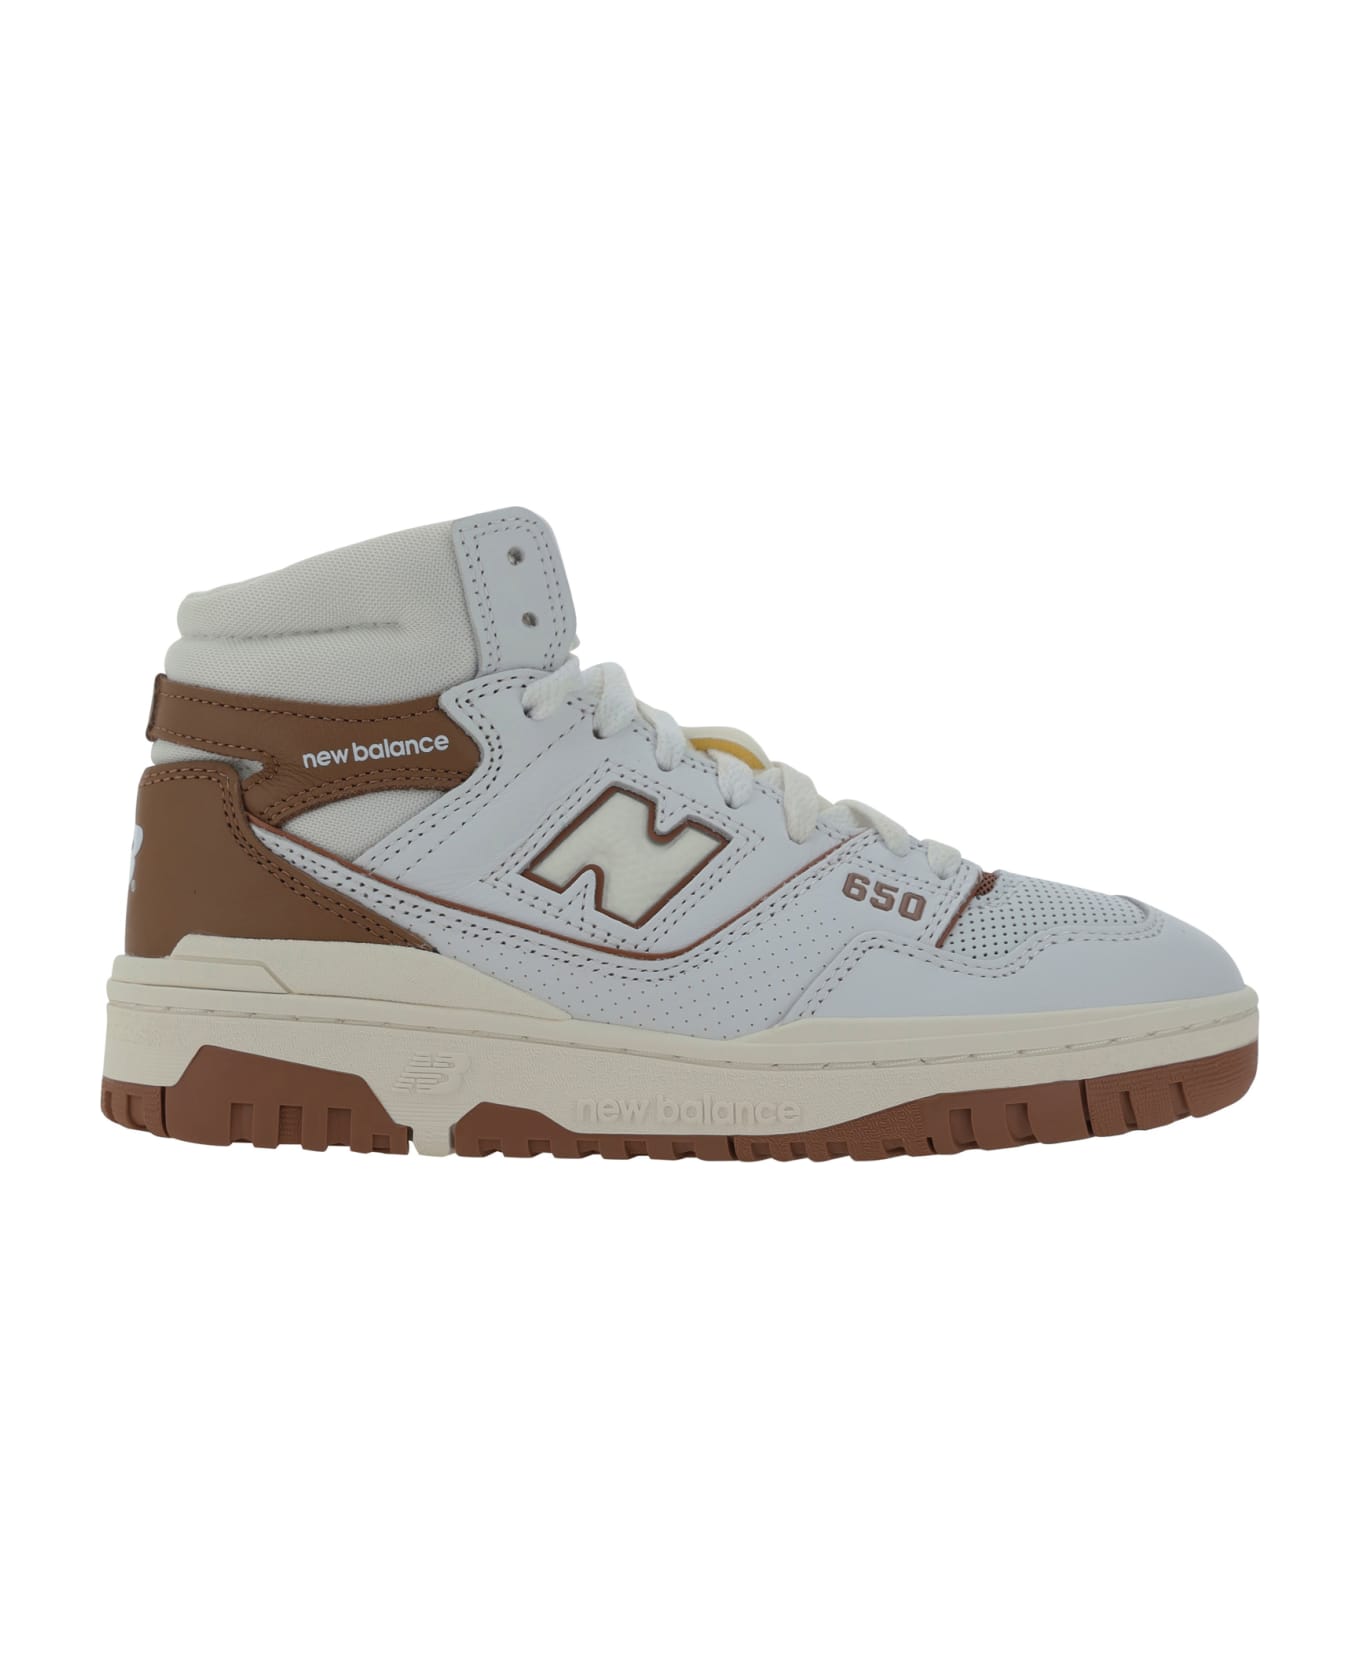 New Balance 550 High Sneakers - White/brick Maroon